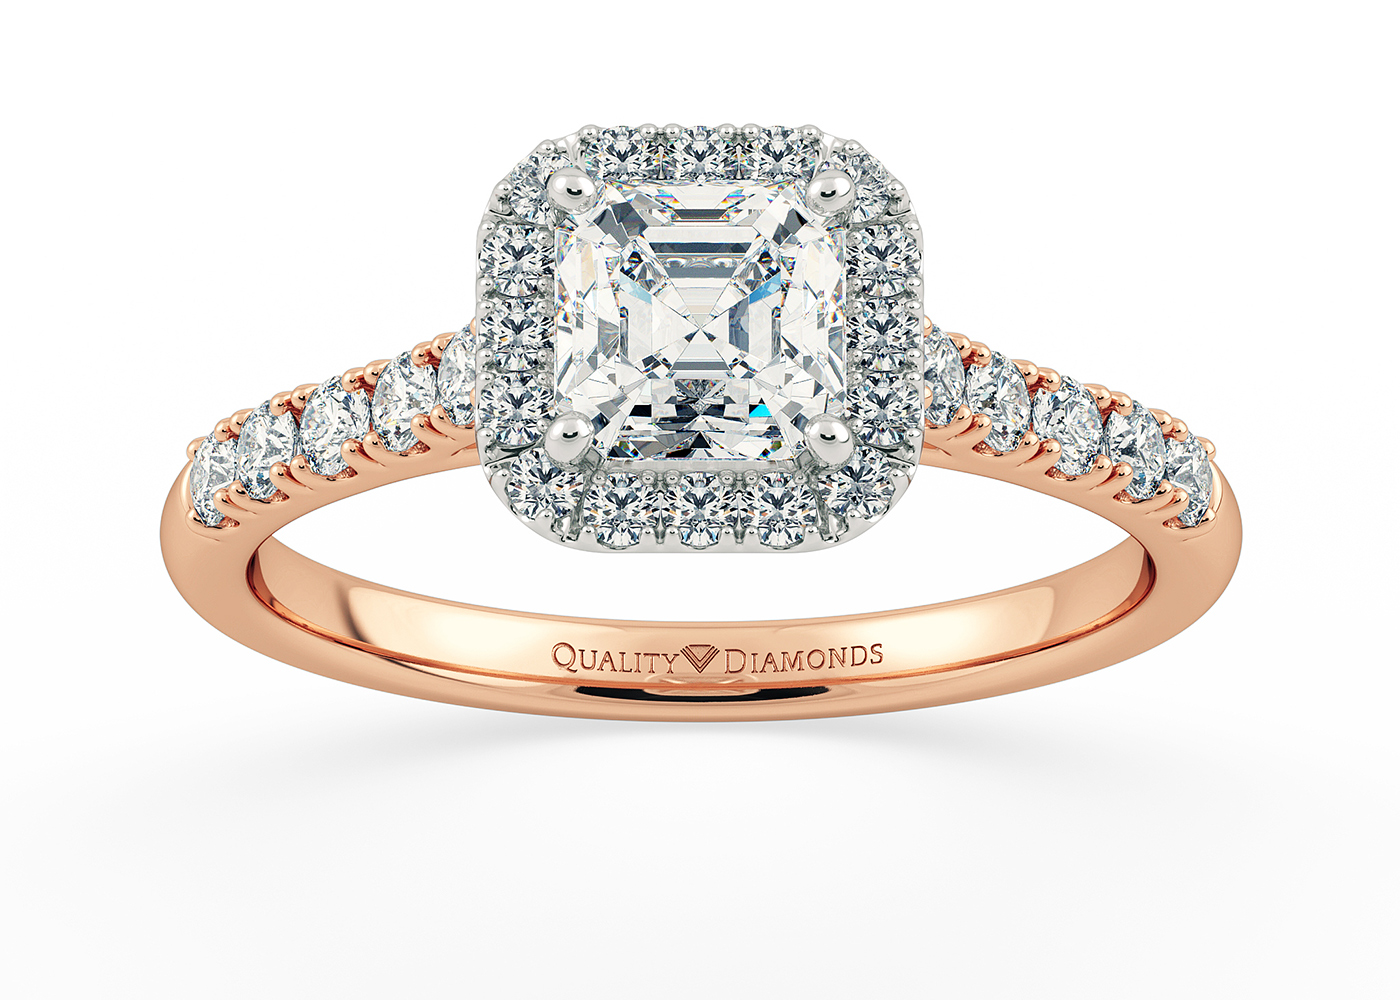 Half Carat Asscher Halo Diamond Ring in 18K Rose Gold